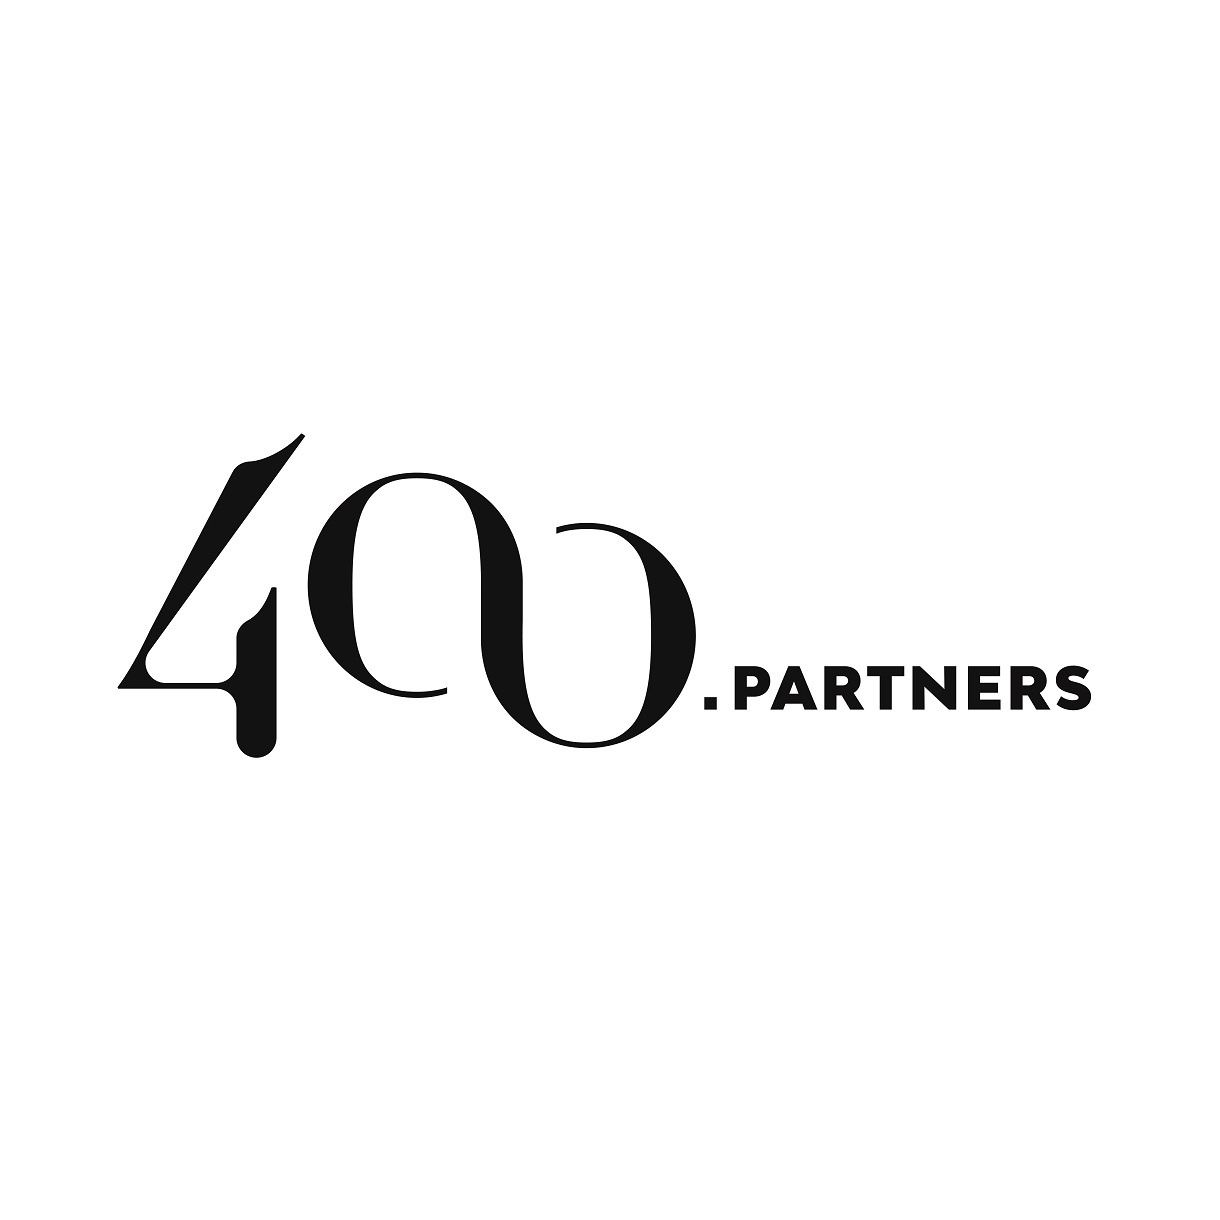 400 Partners